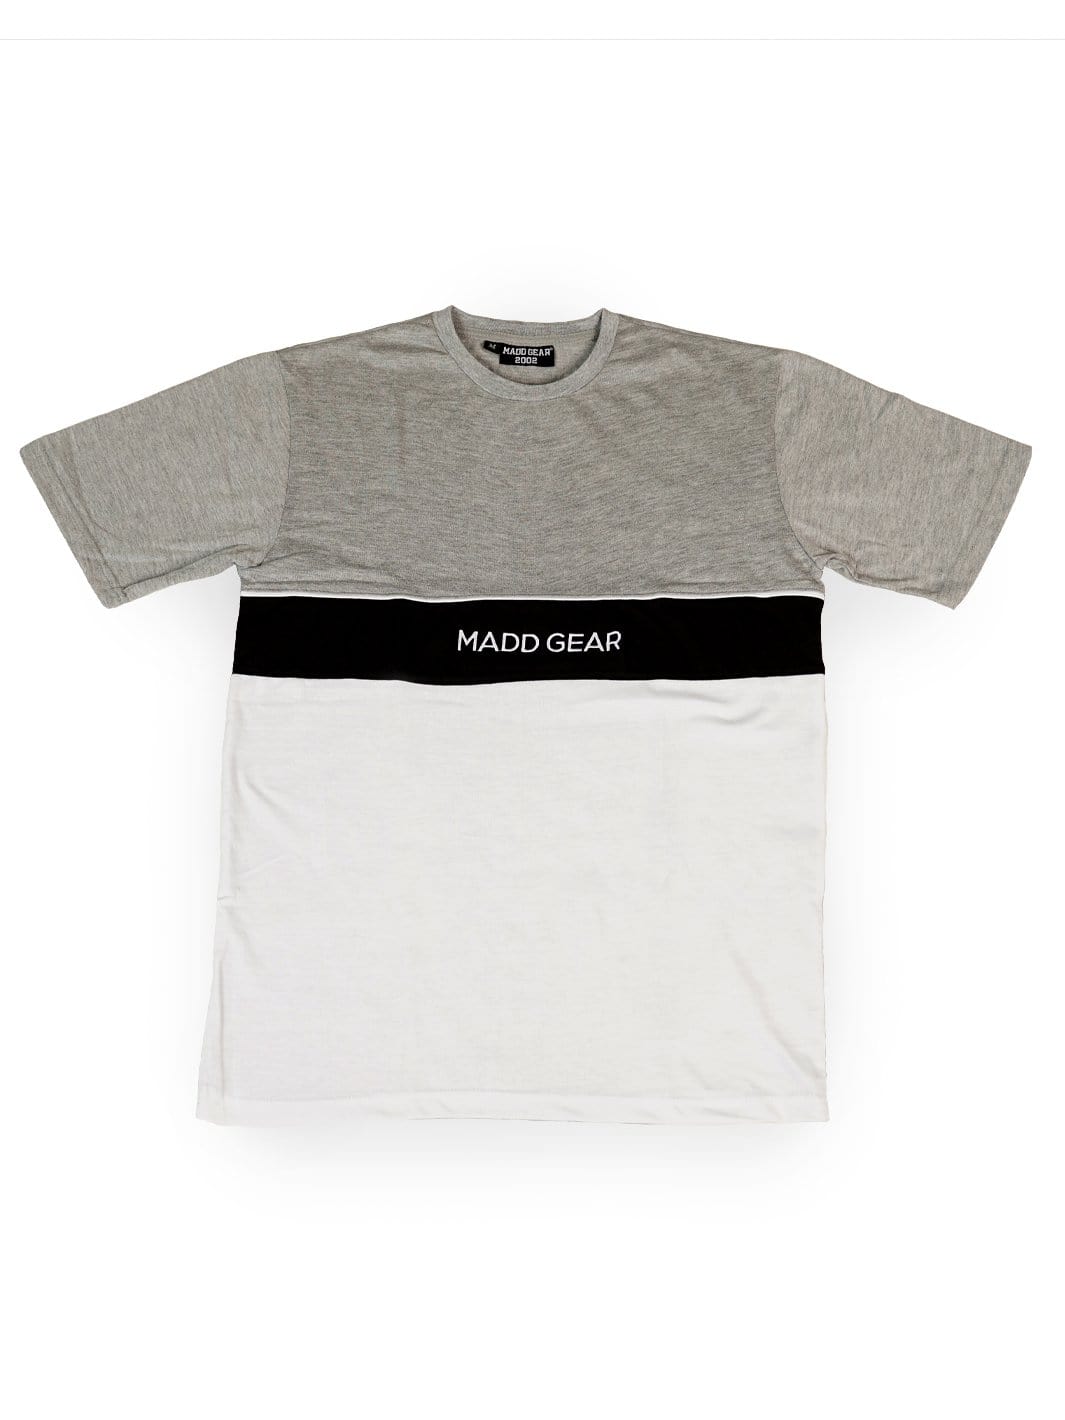 Madd Gear Tee T Shirt T-shirt Gray White Mens Womens Kids